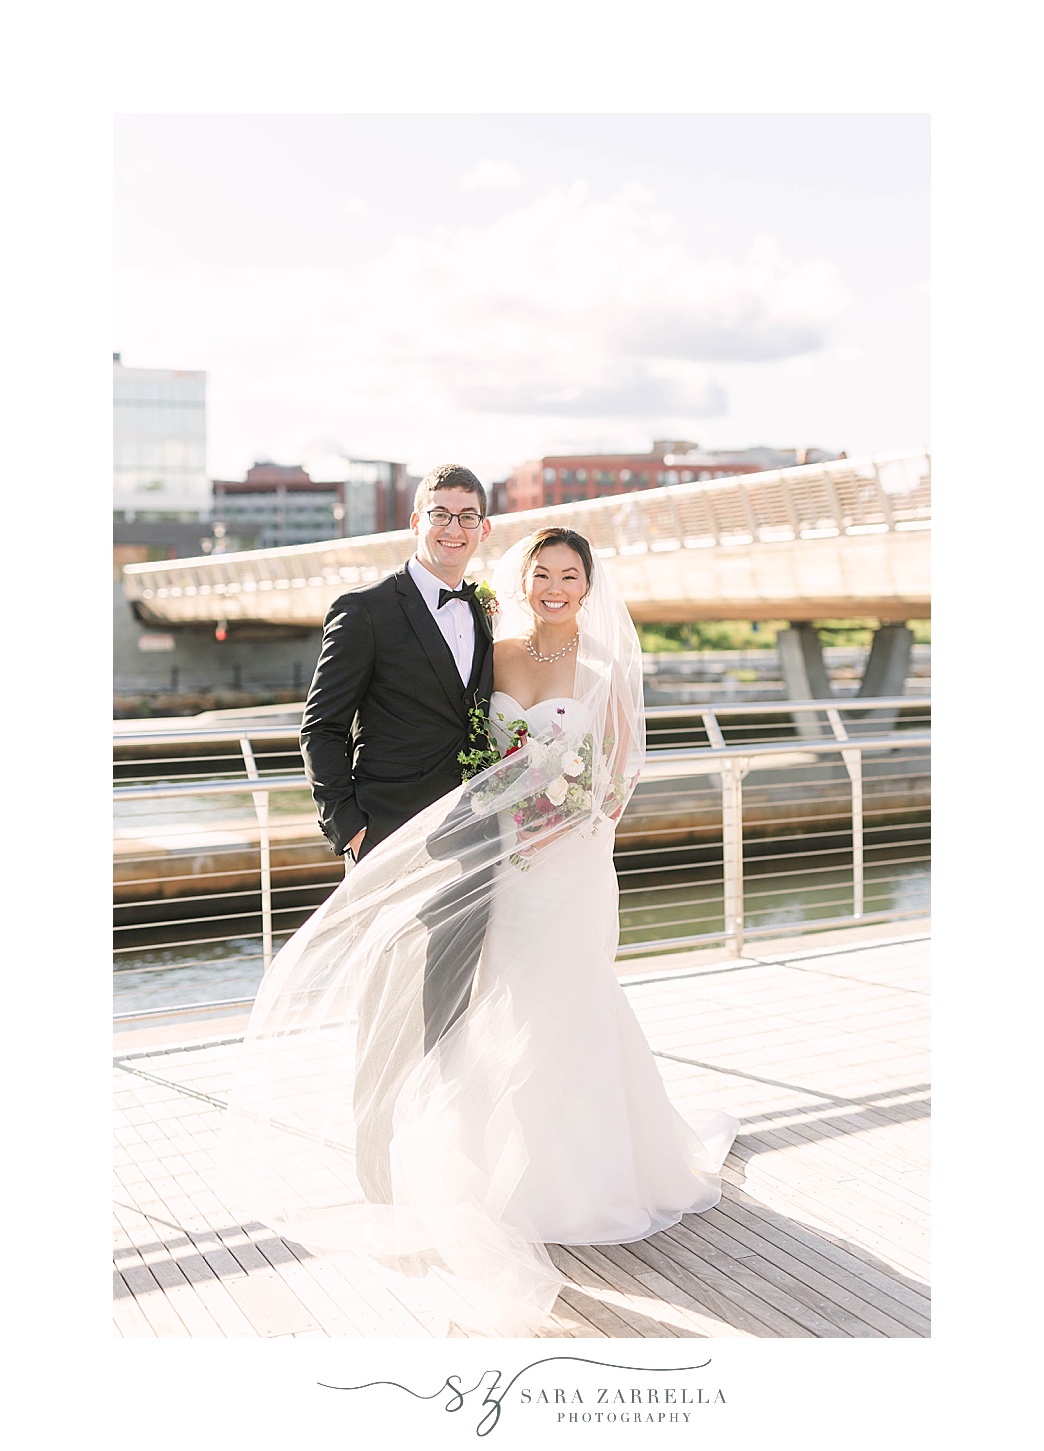 newlyweds pose on bridge after Downtown Providence wedding ceremony 